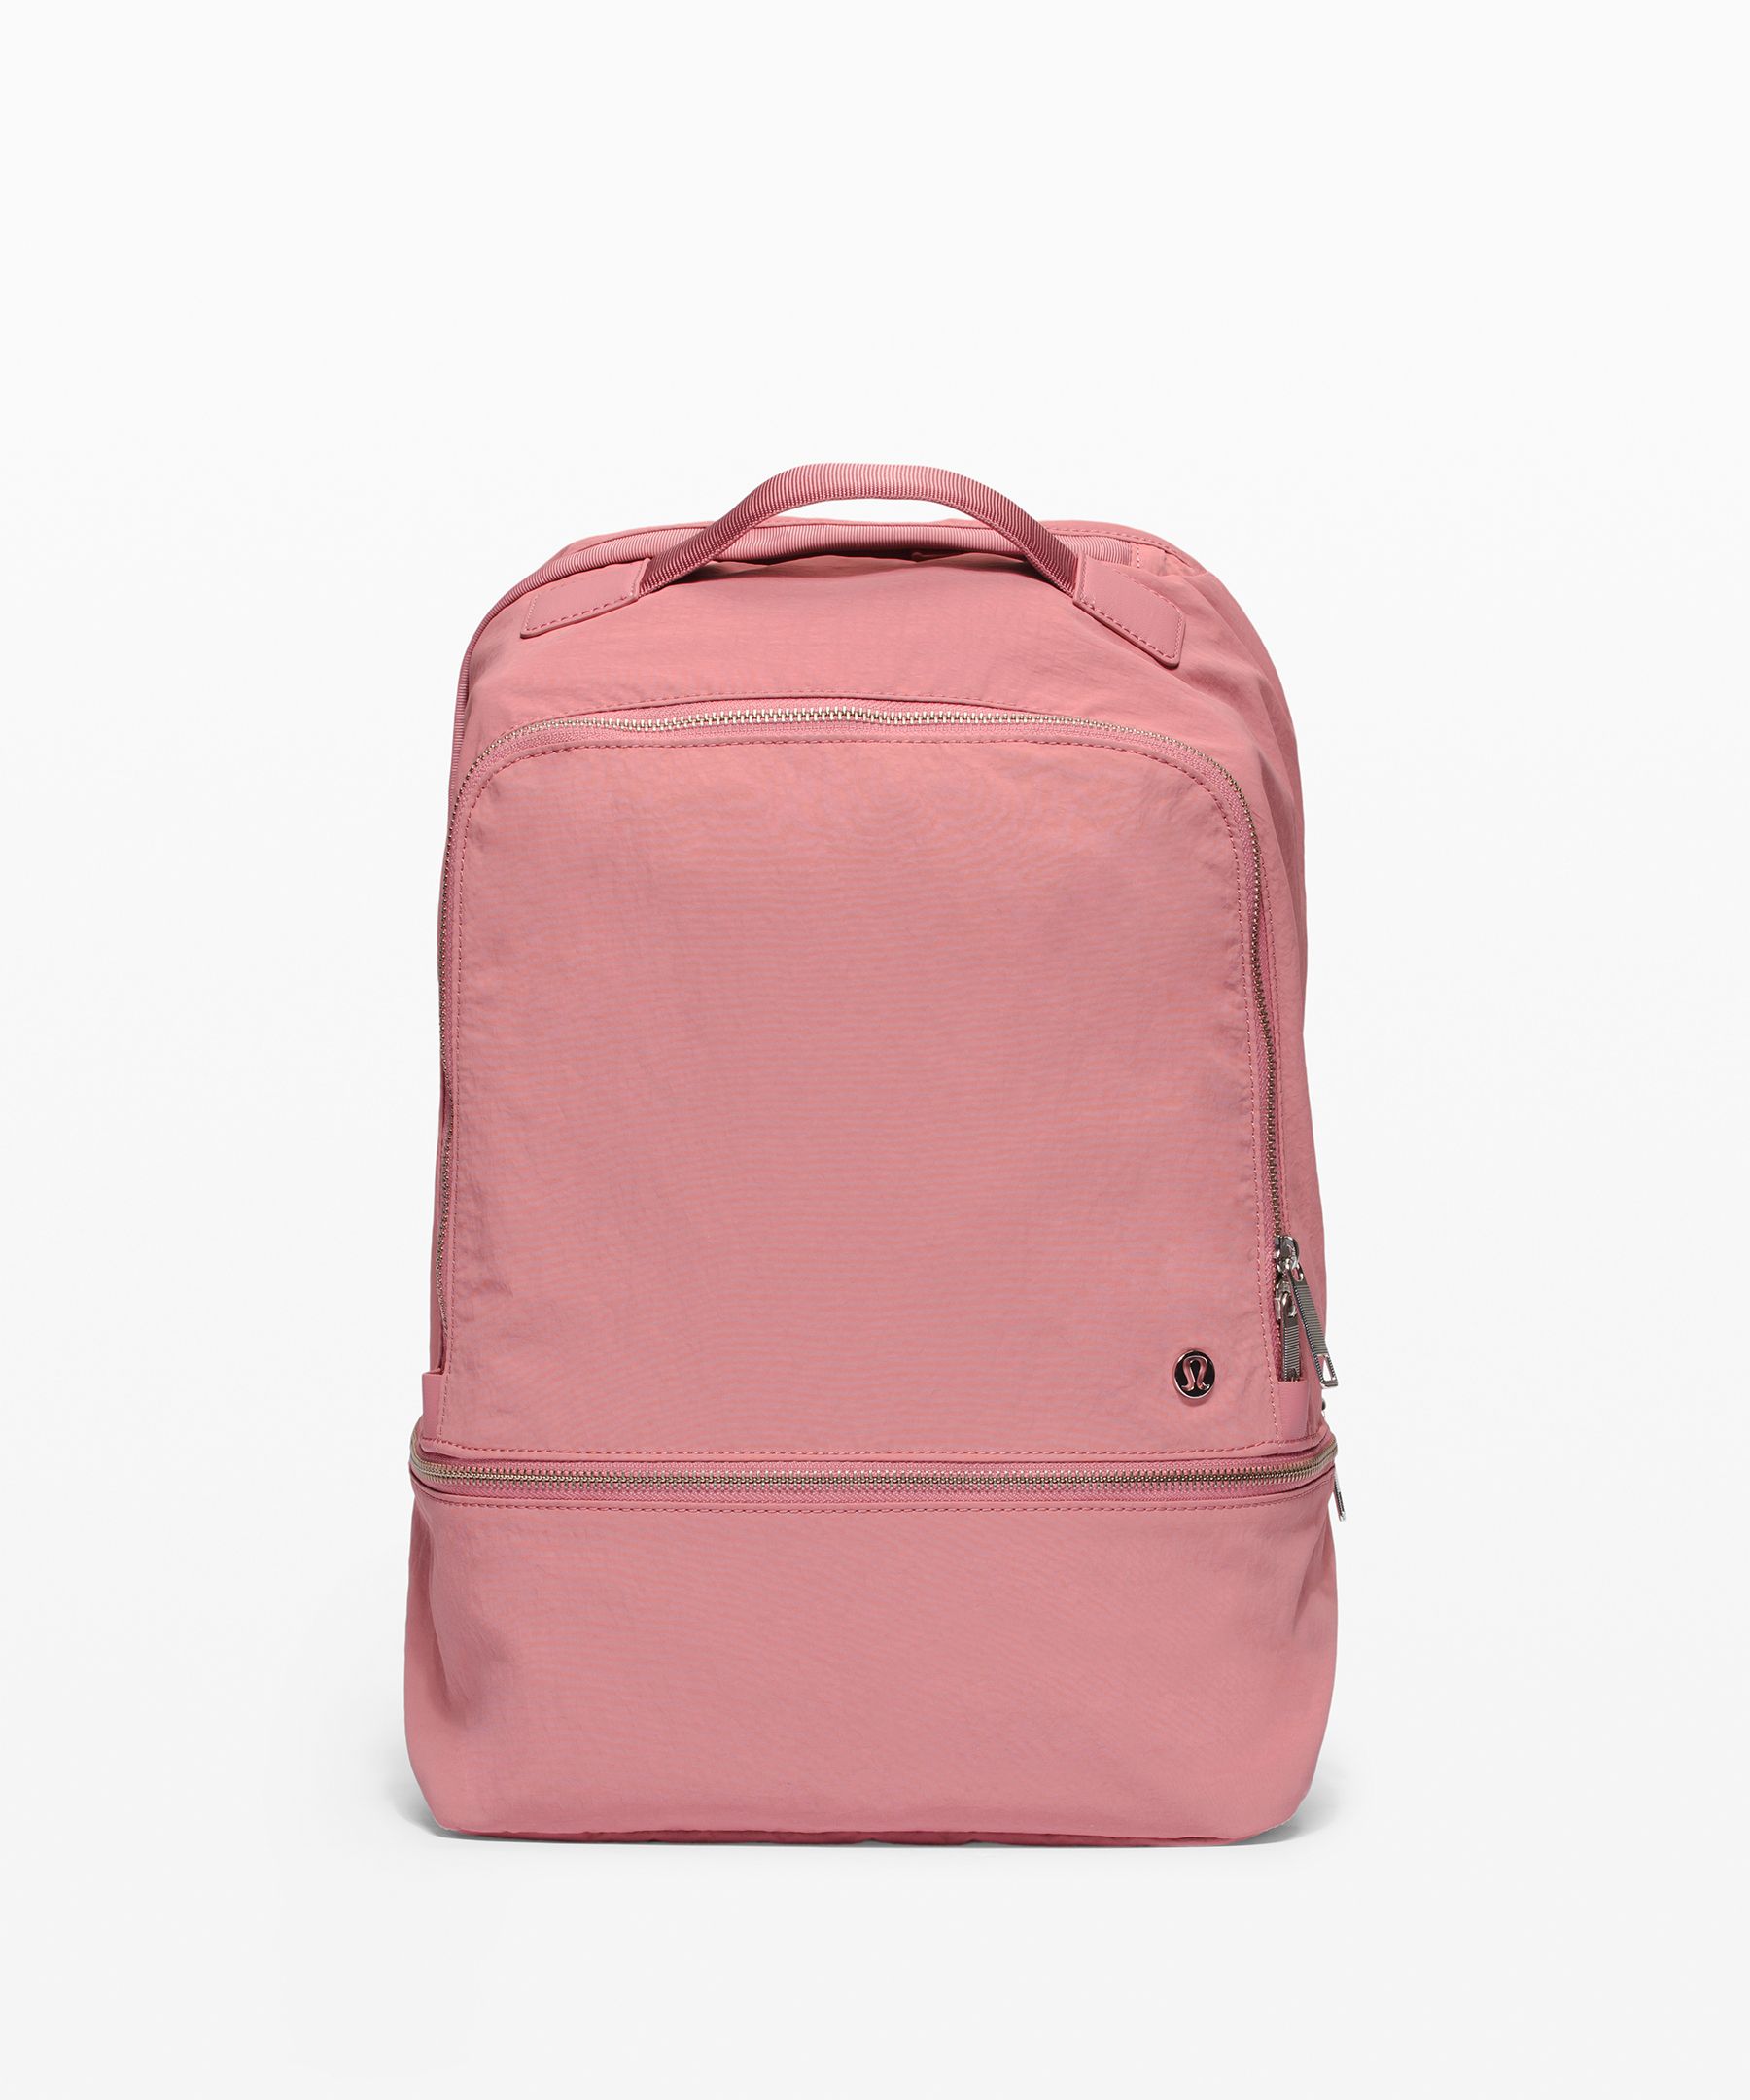 pink lululemon bag